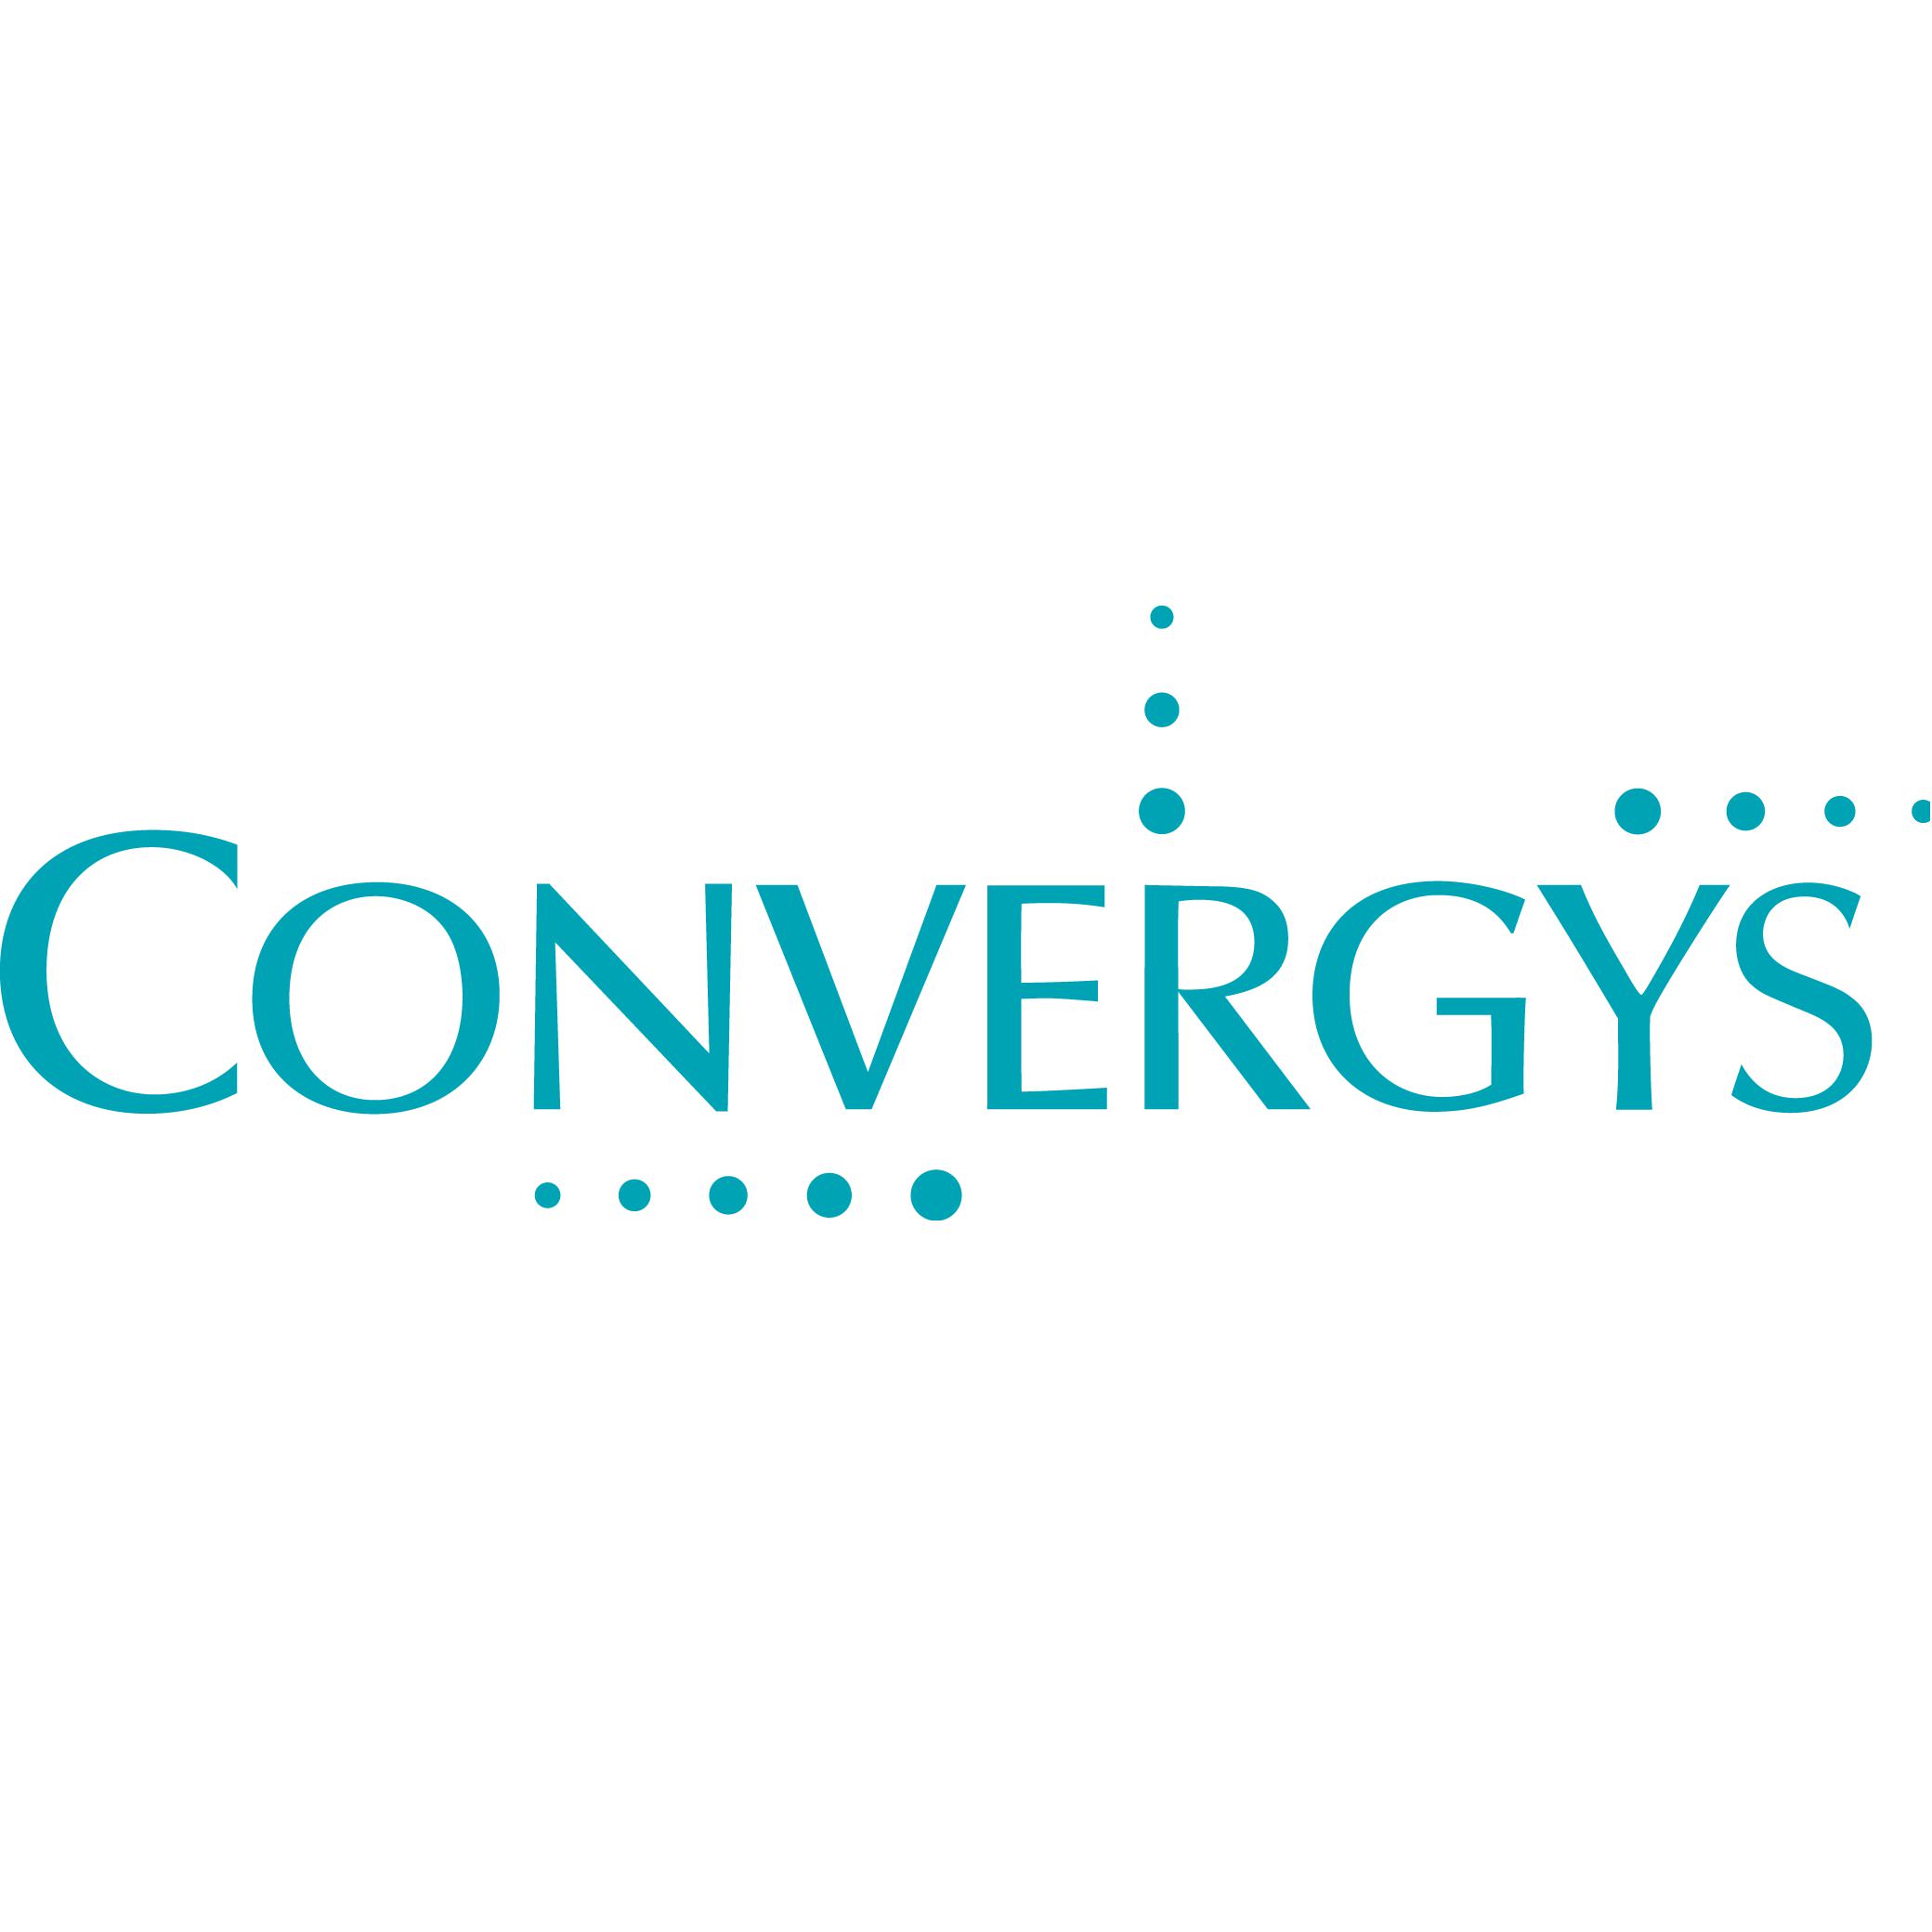 Convergys Logos